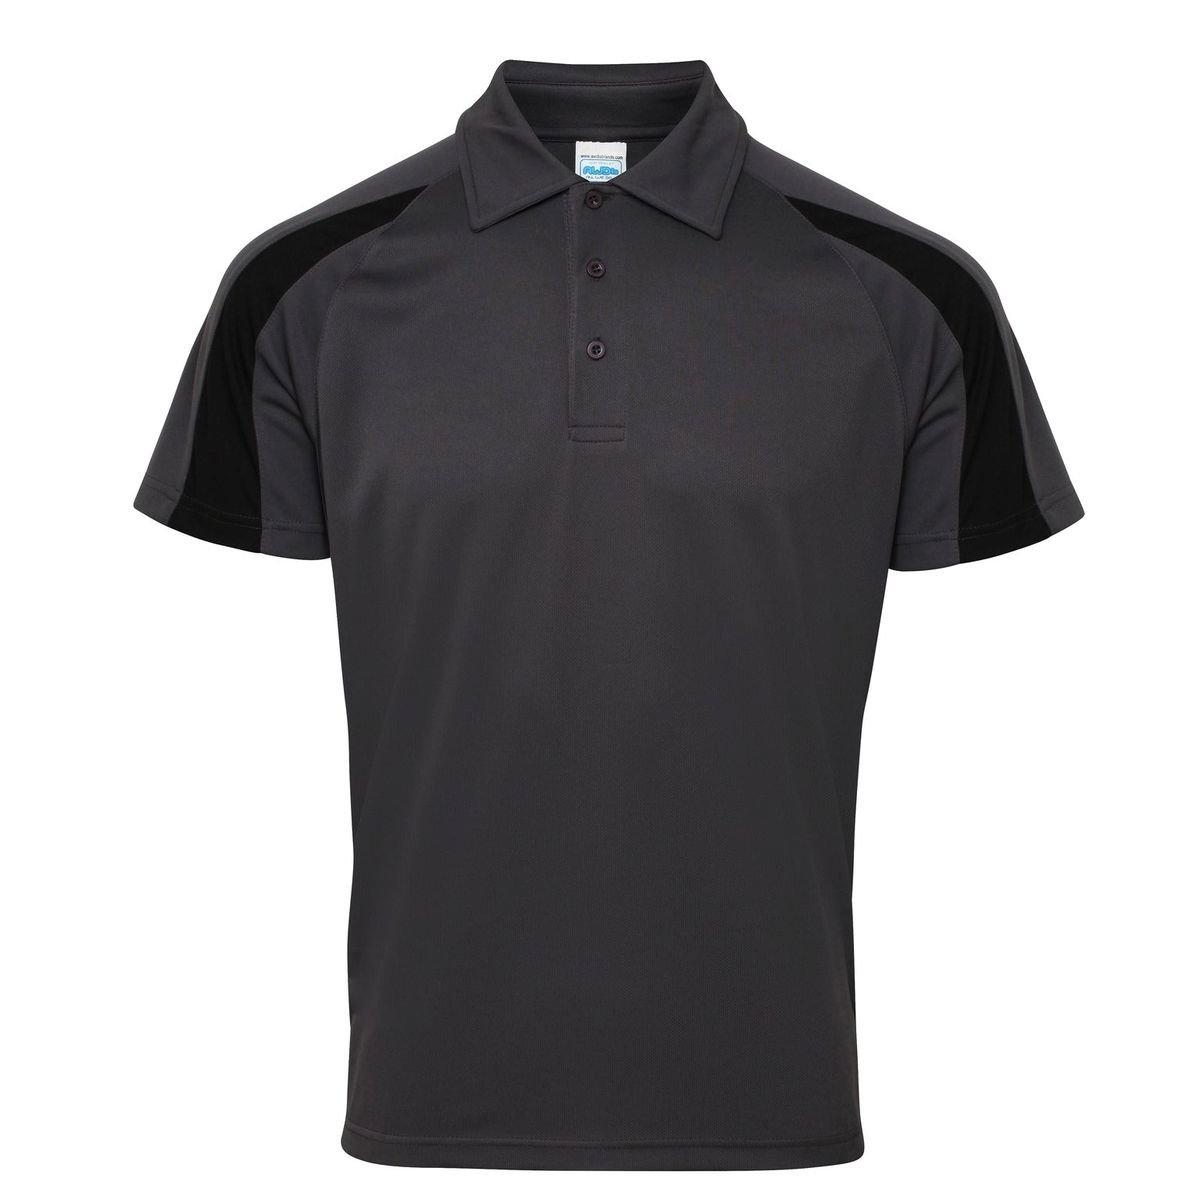 Just Cool Kurzarm Polo Shirt Mit Kontrast Panel Herren Charcoal Black S von AWDis